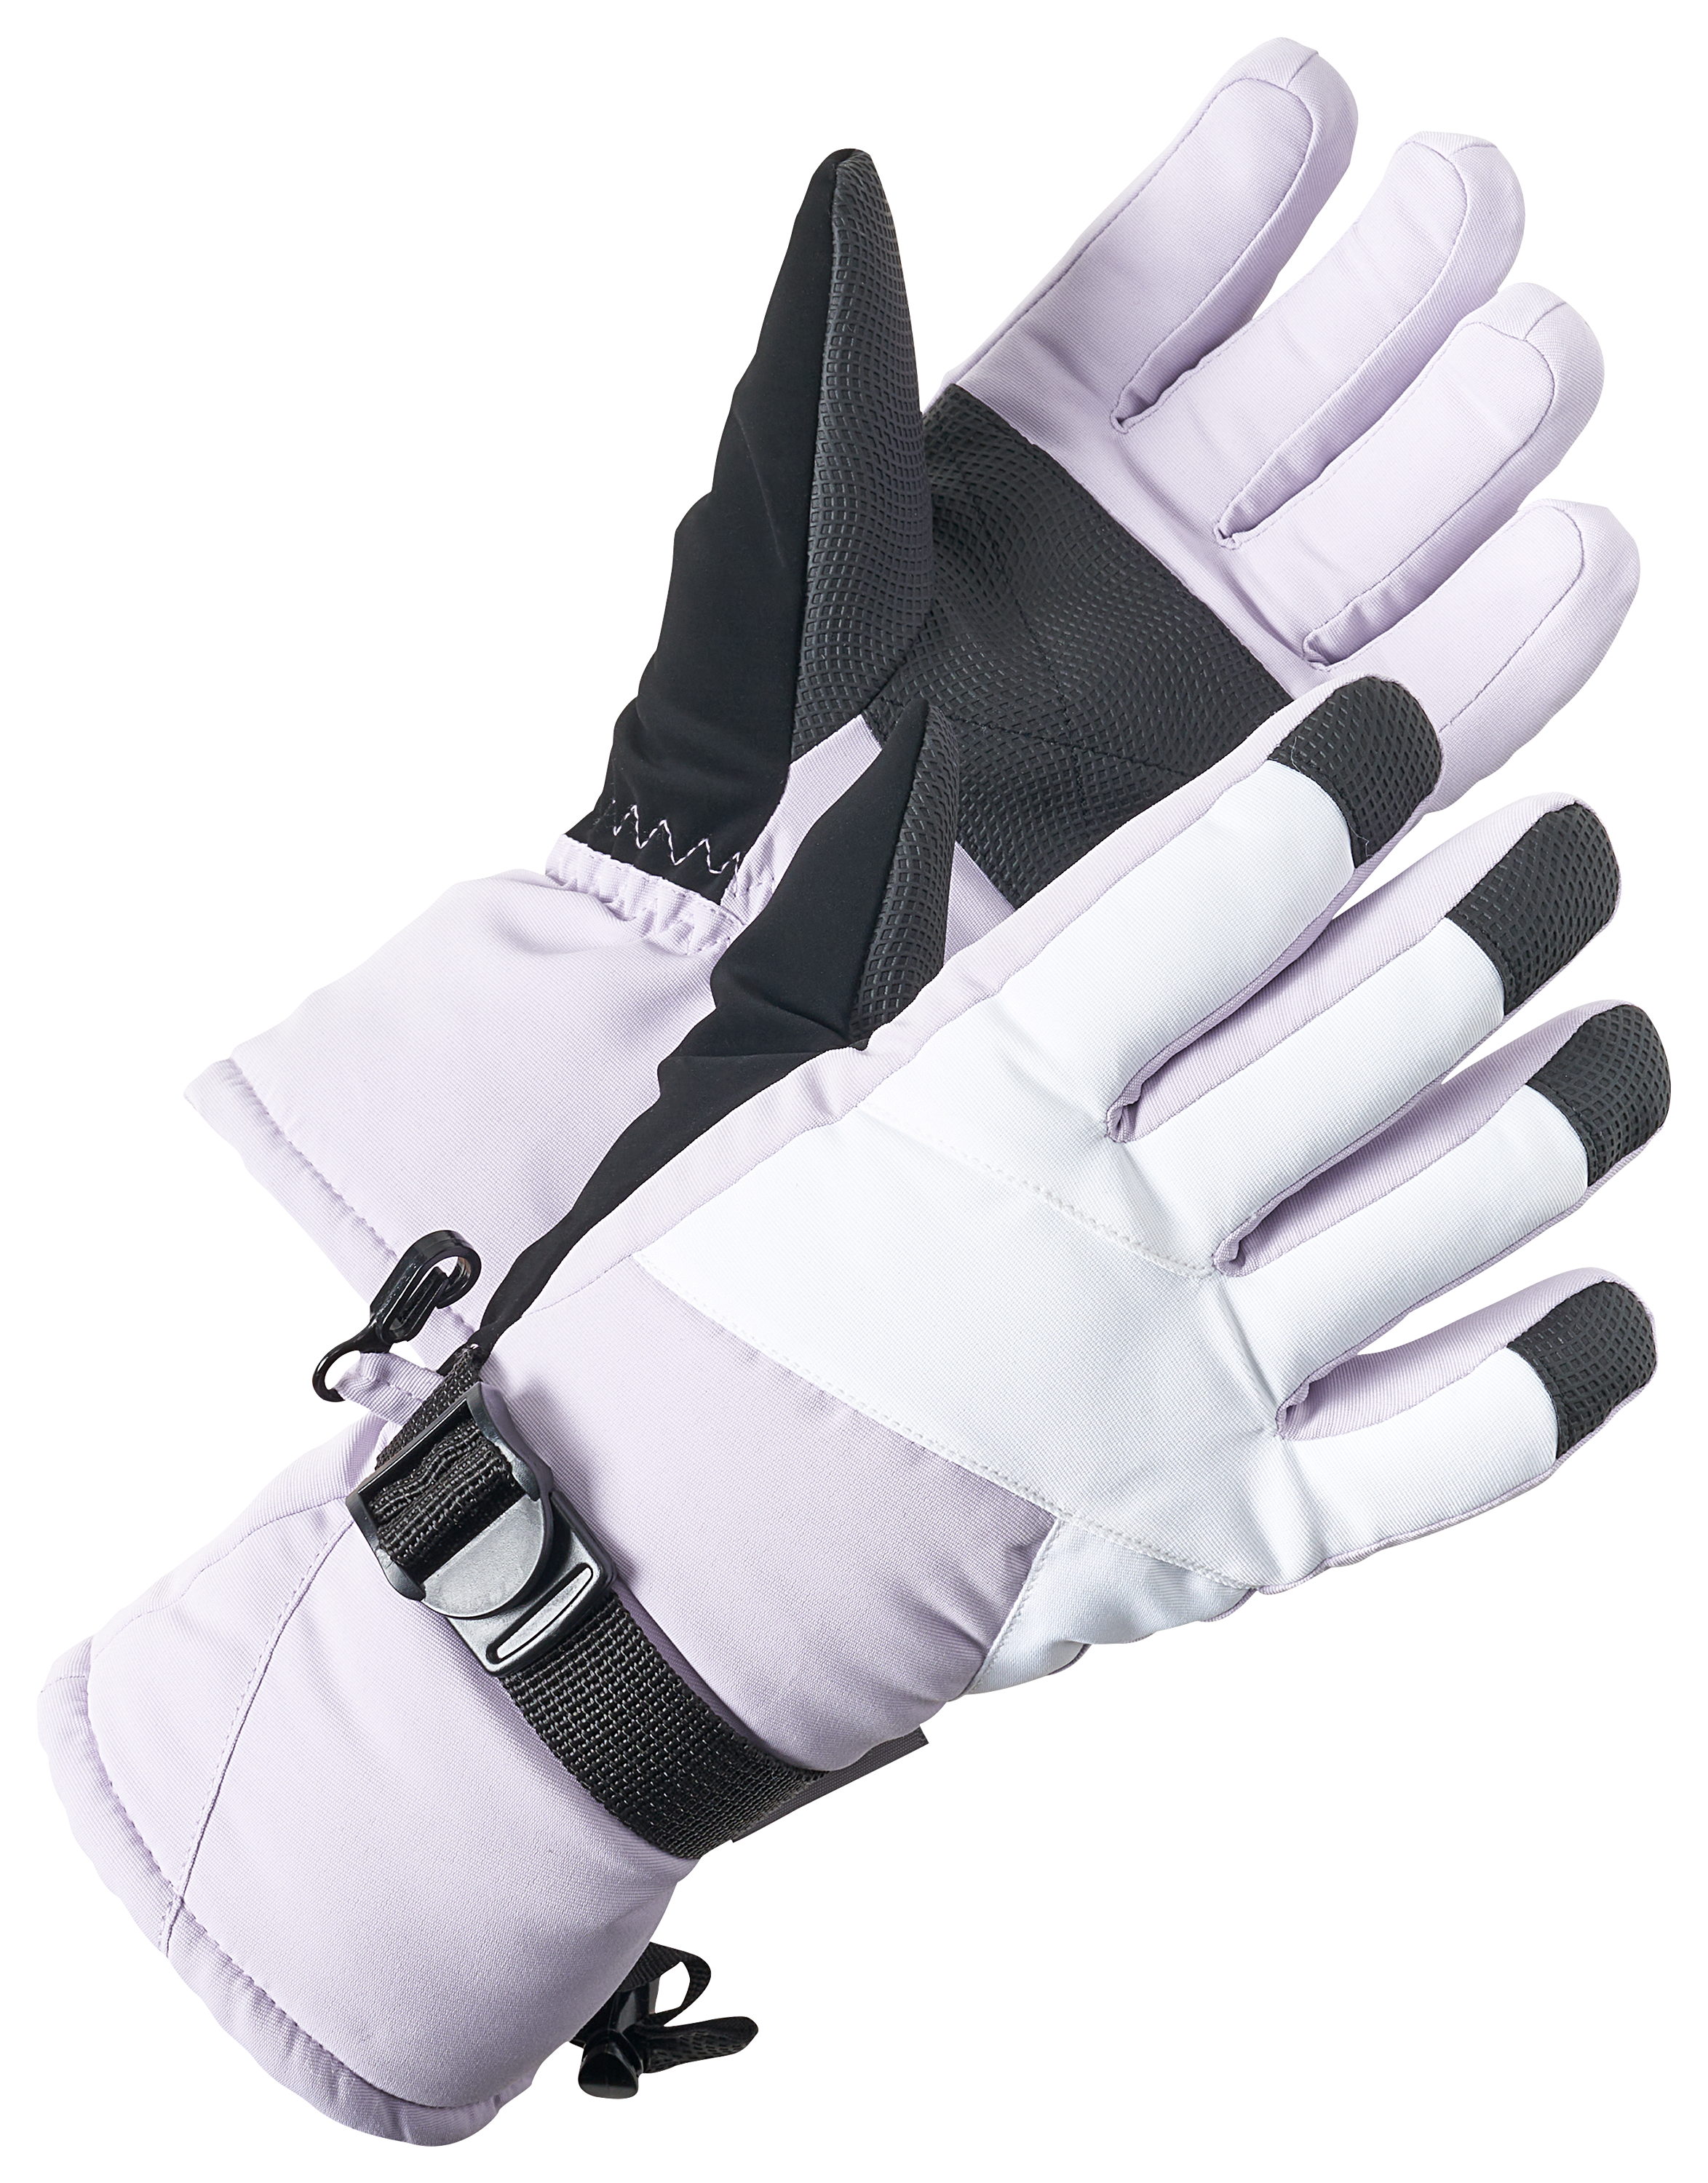 Under Armour Storm Liner Gloves for Kids